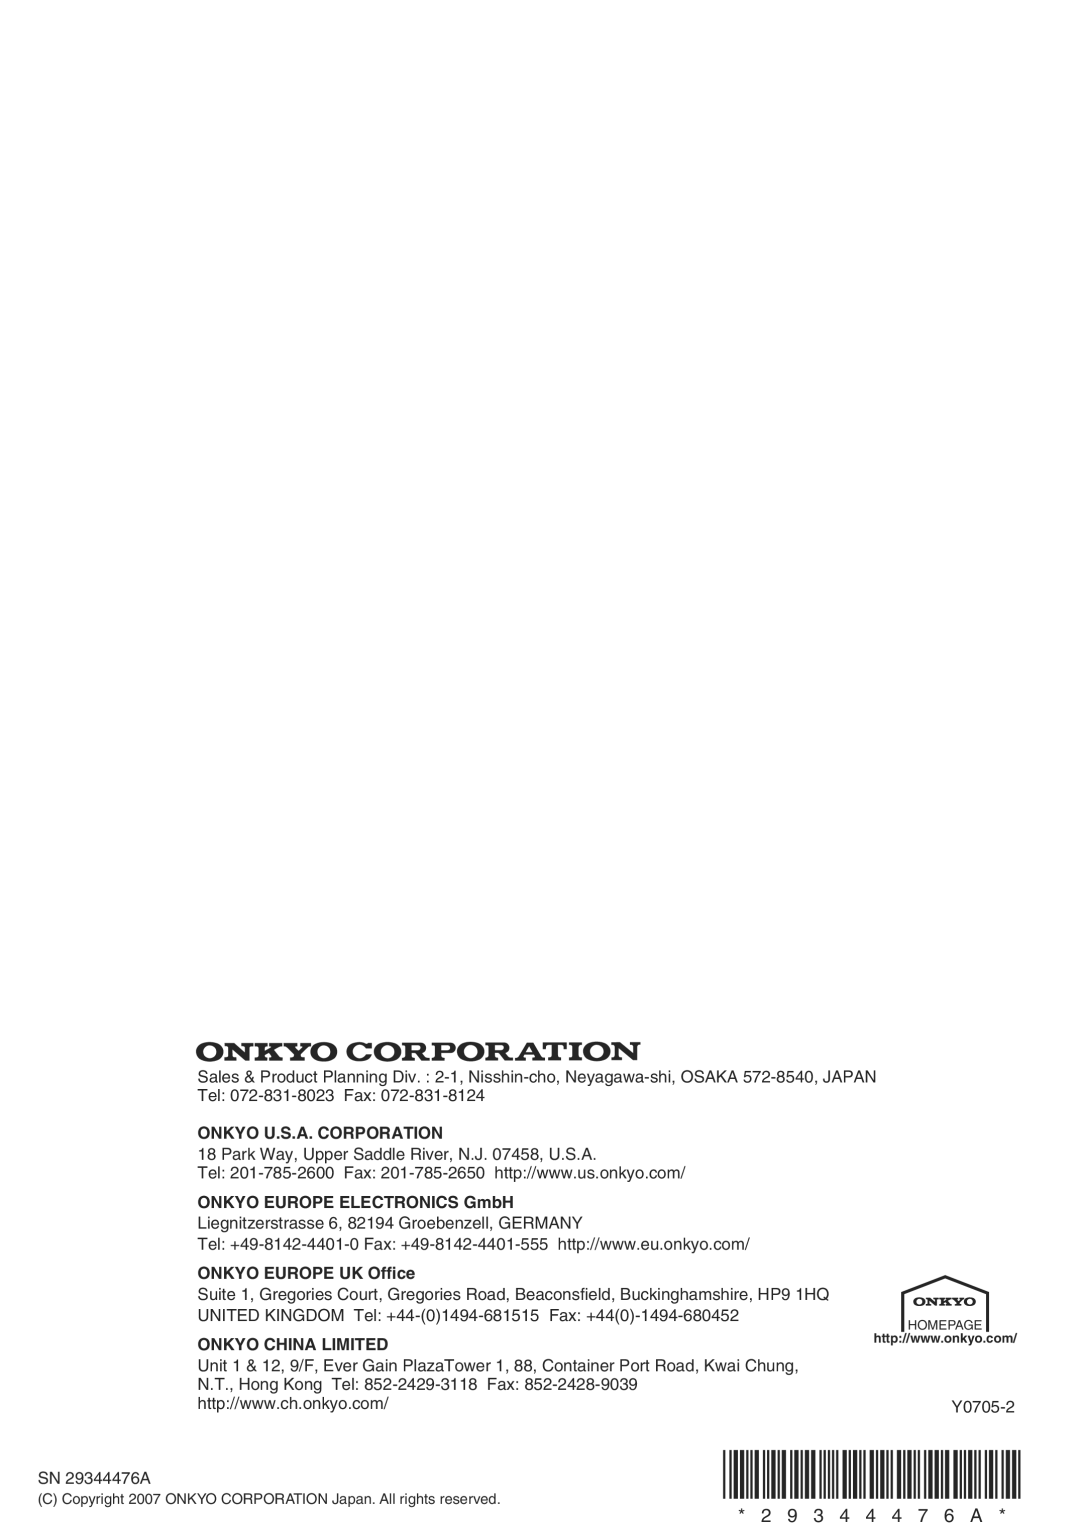 Onkyo TX-SA705 2 9 3 4 4 4 7 6 A, Onkyo U.S.A. Corporation, ONKYO EUROPE ELECTRONICS GmbH, ONKYO EUROPE UK Office 